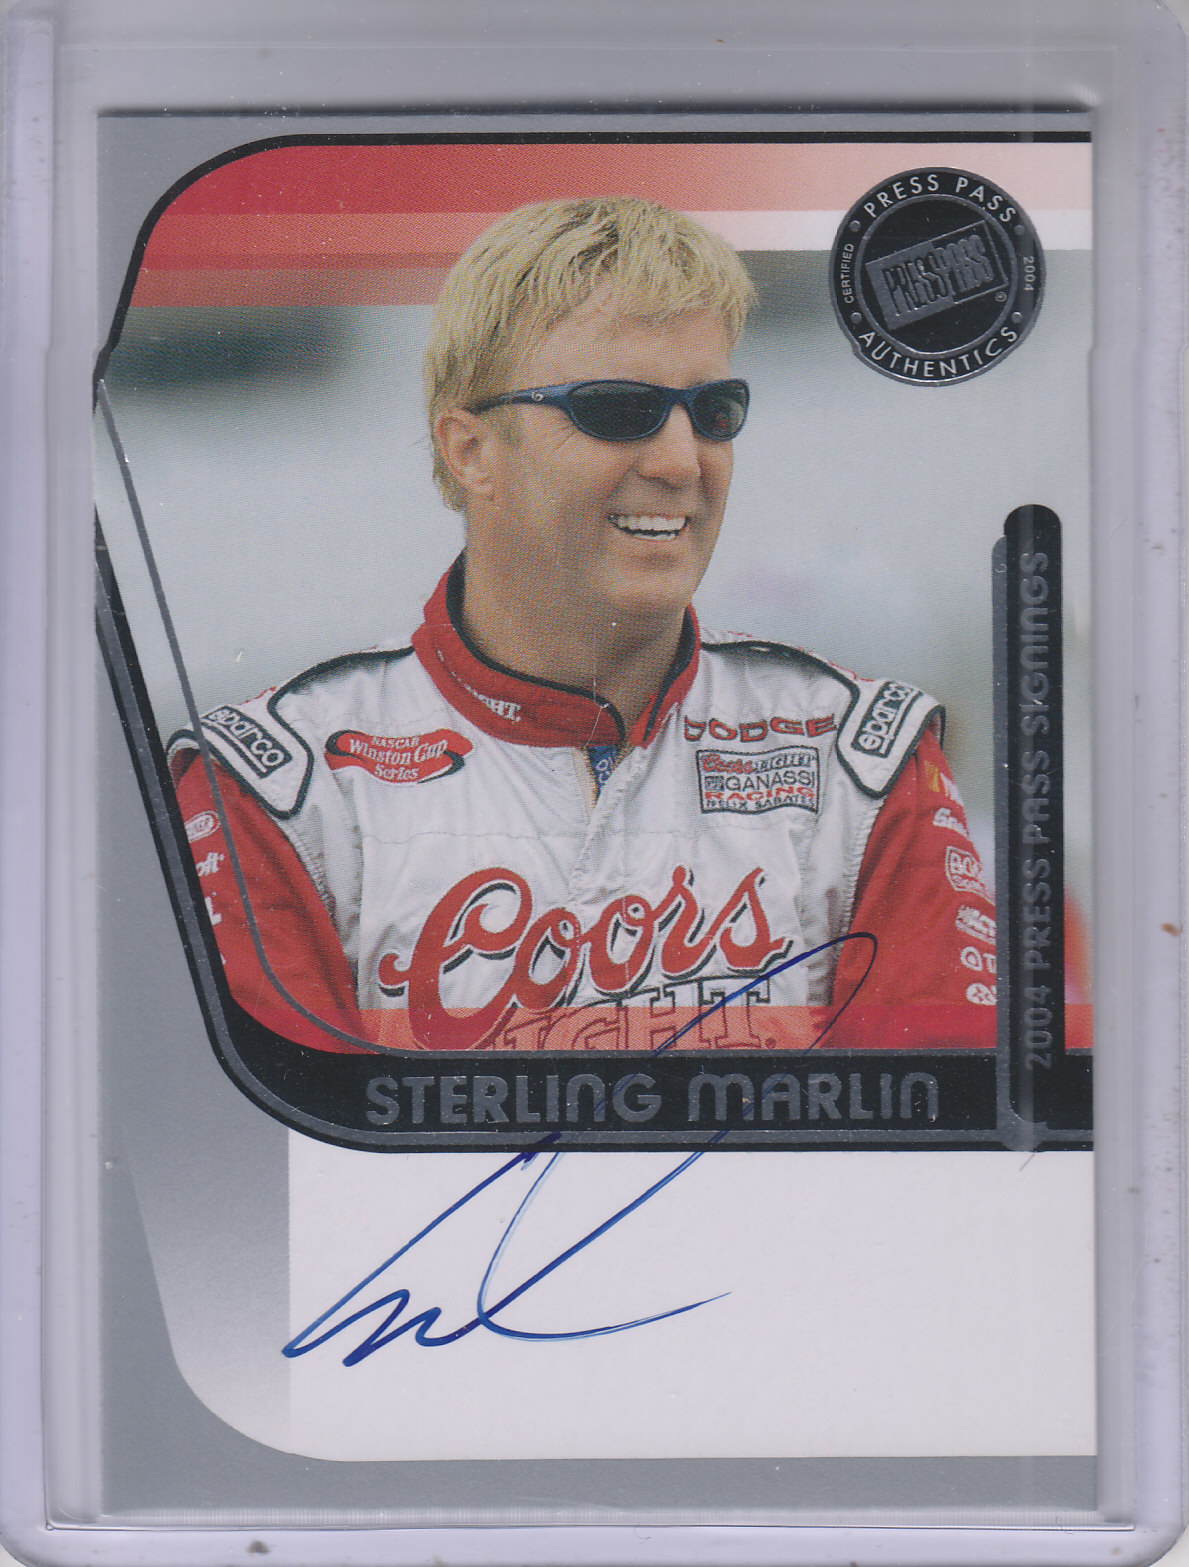 2004 Press Pass Signings #40 Sterling Marlin O/P/S/T/V